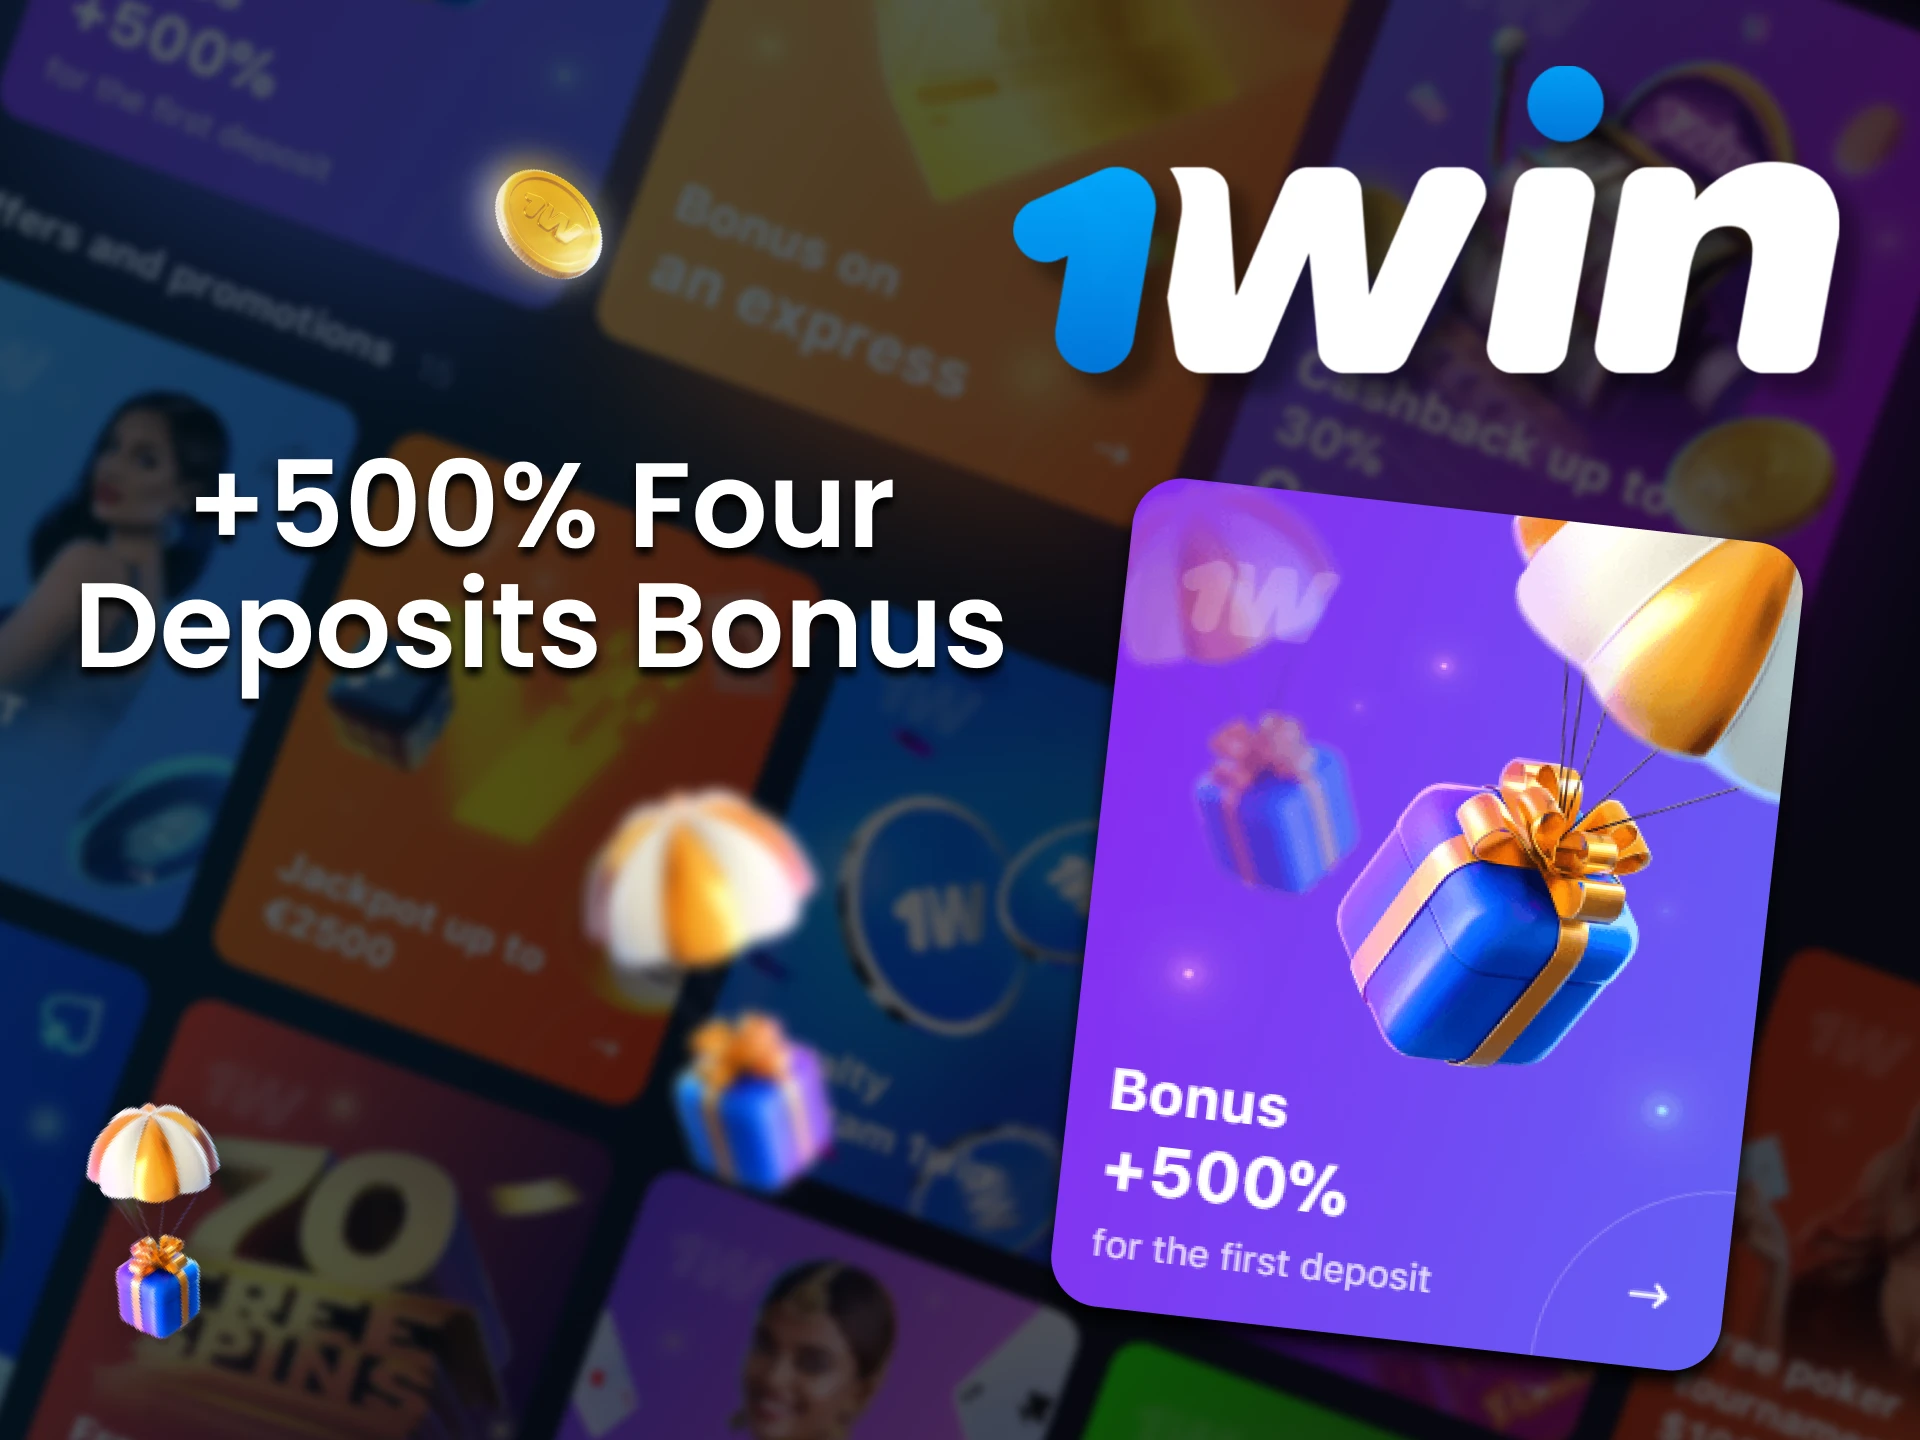 1win gives a bonus when you make a deposit.